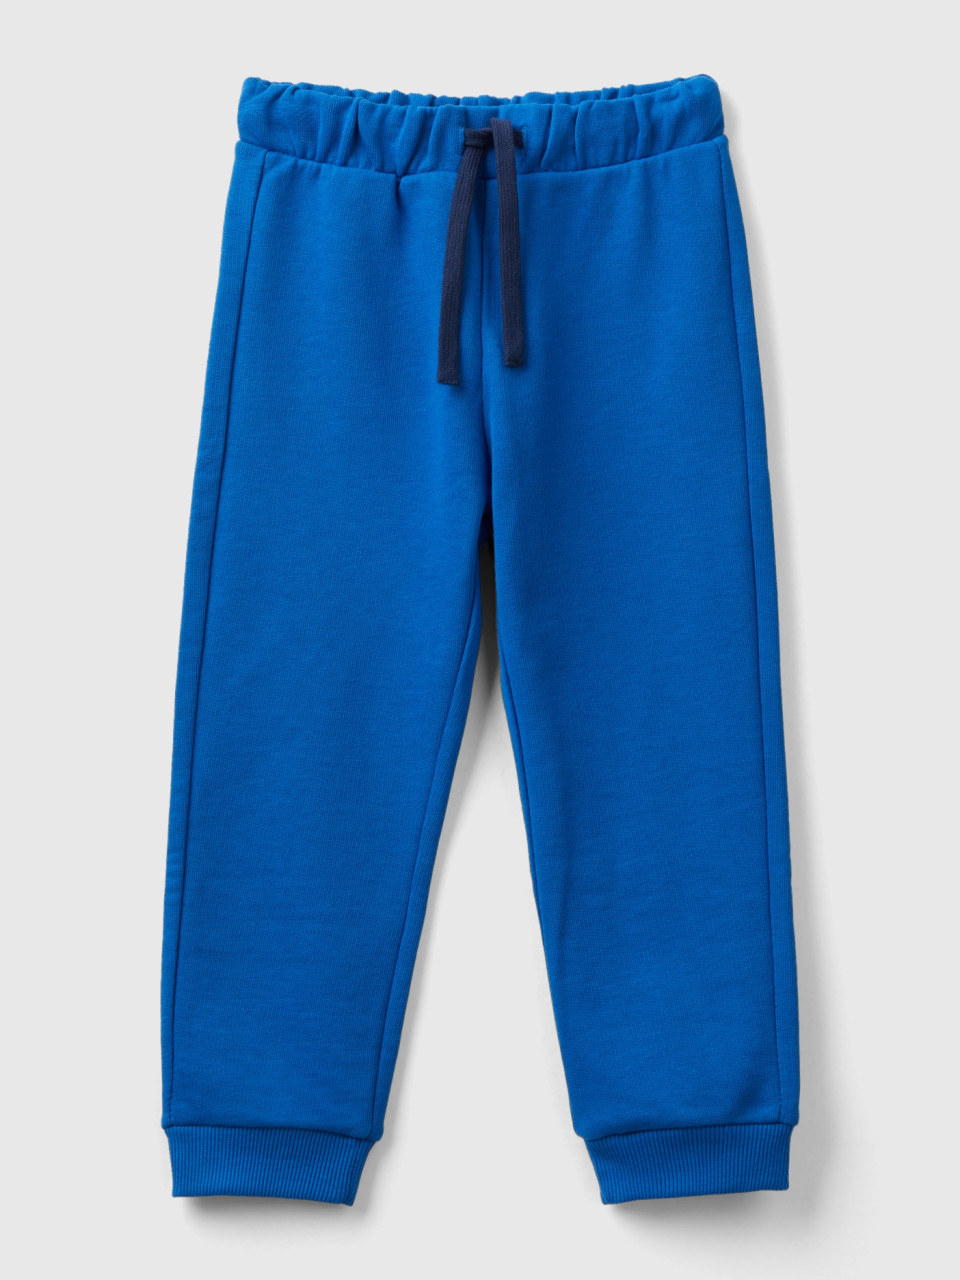 Benetton, Sweatpants With Pocket, Bright Blue, Kids